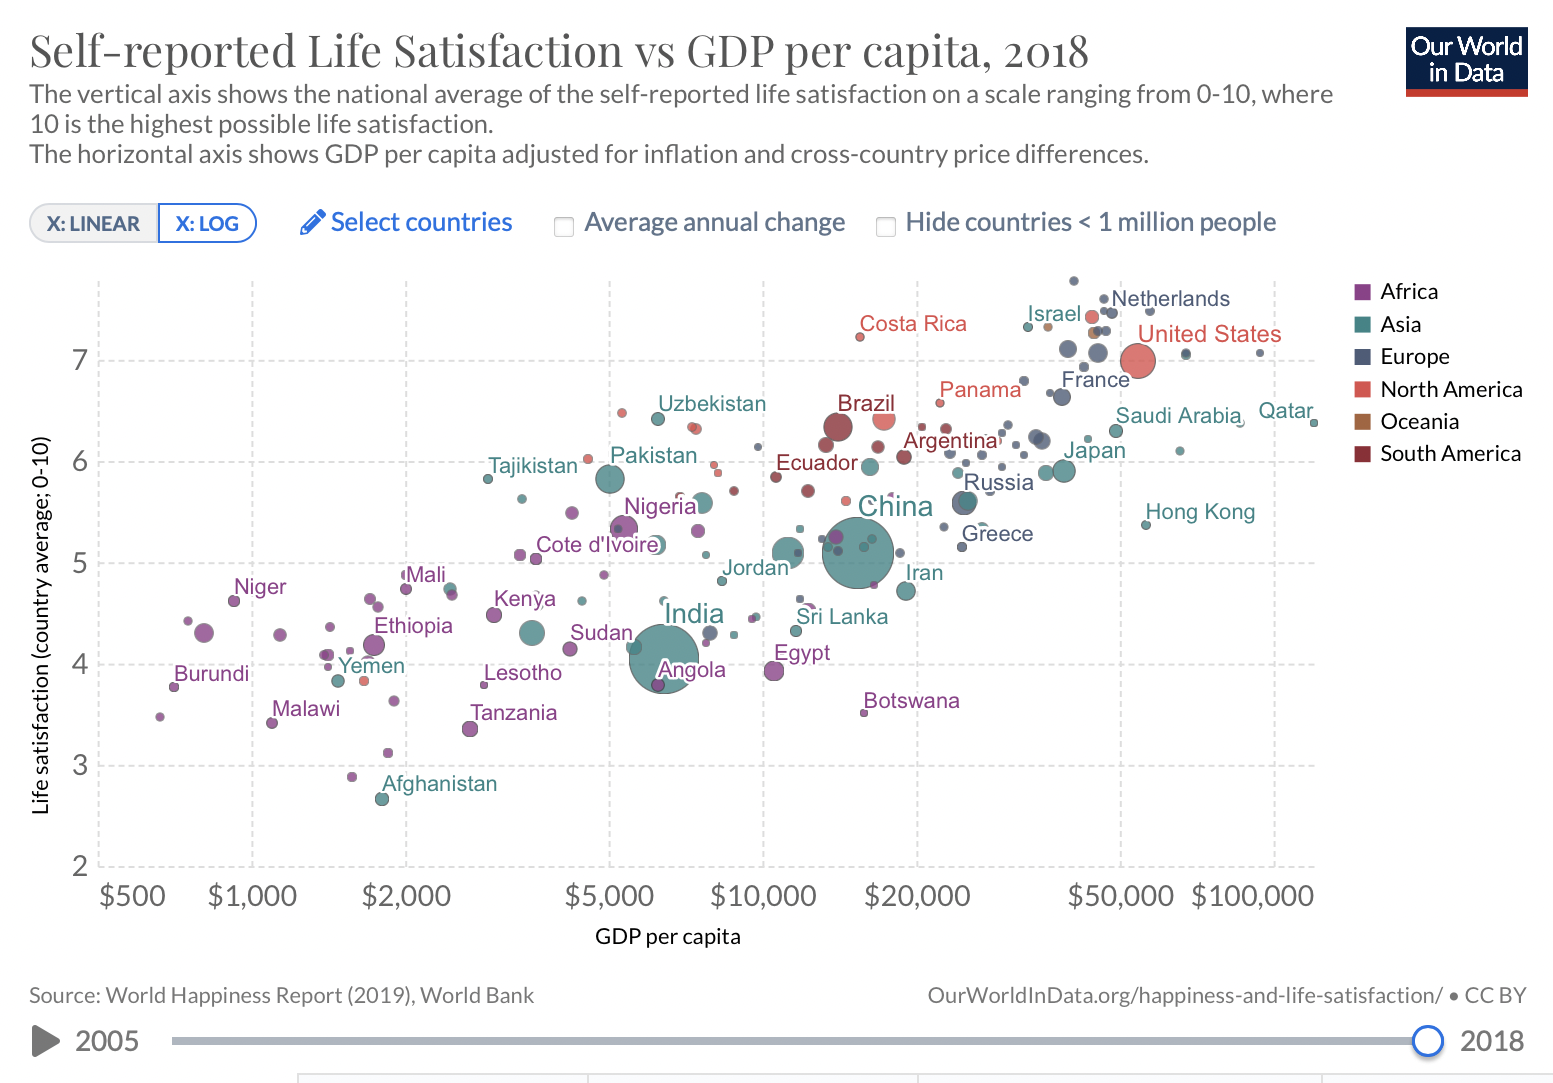 Self-reported life satisfaction (happiness) vs. GDP per capita (income)
